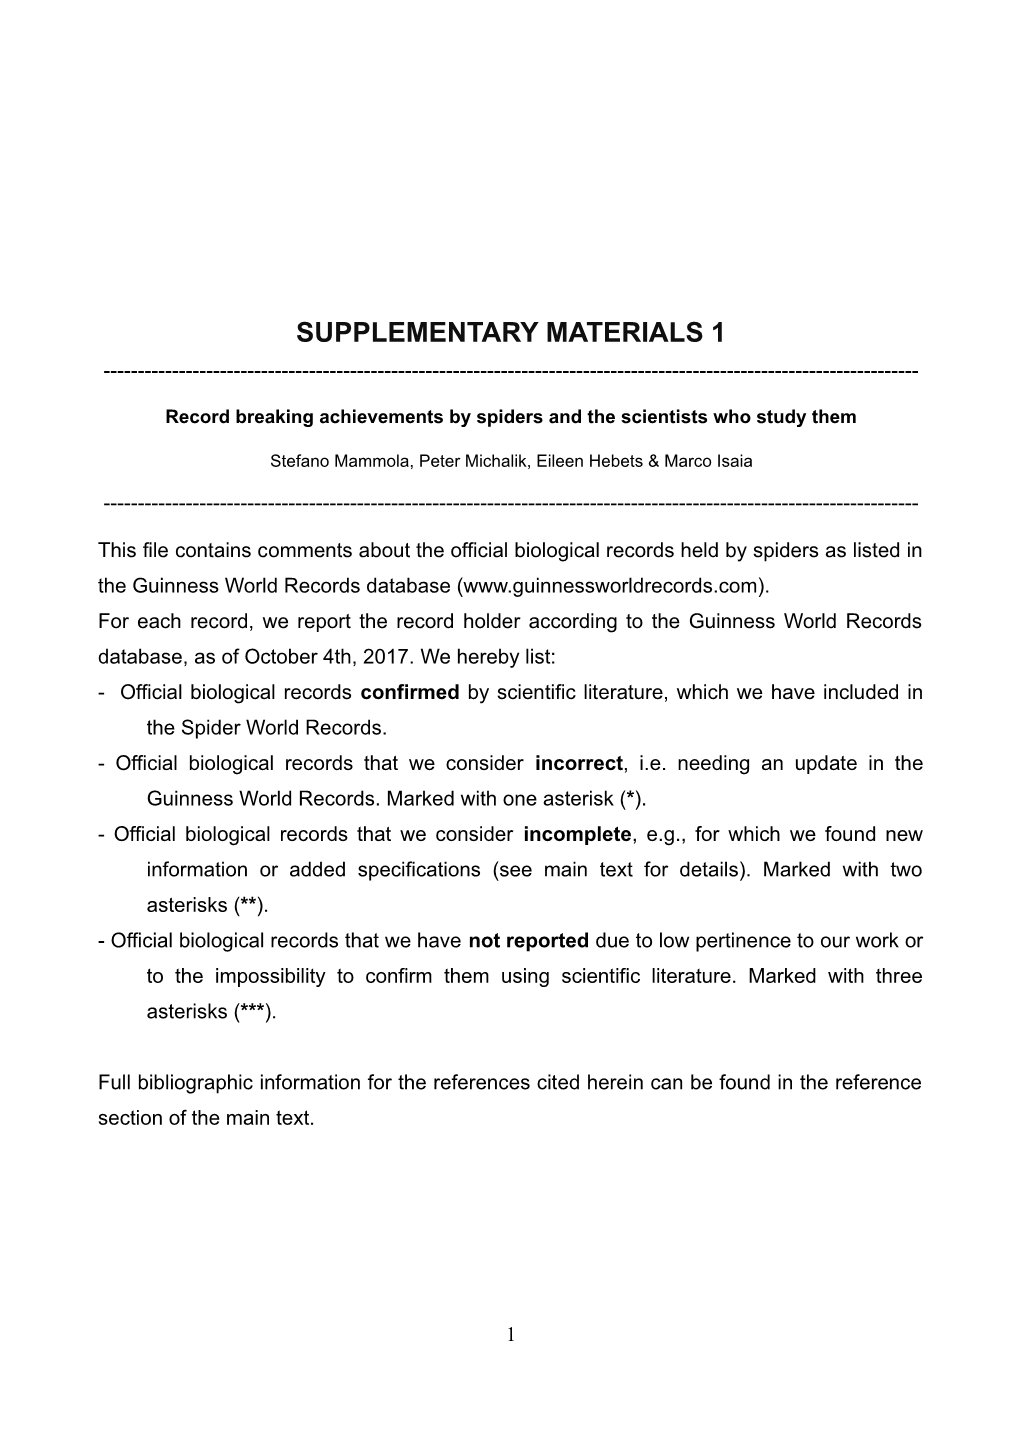 Supplementary Materials 1